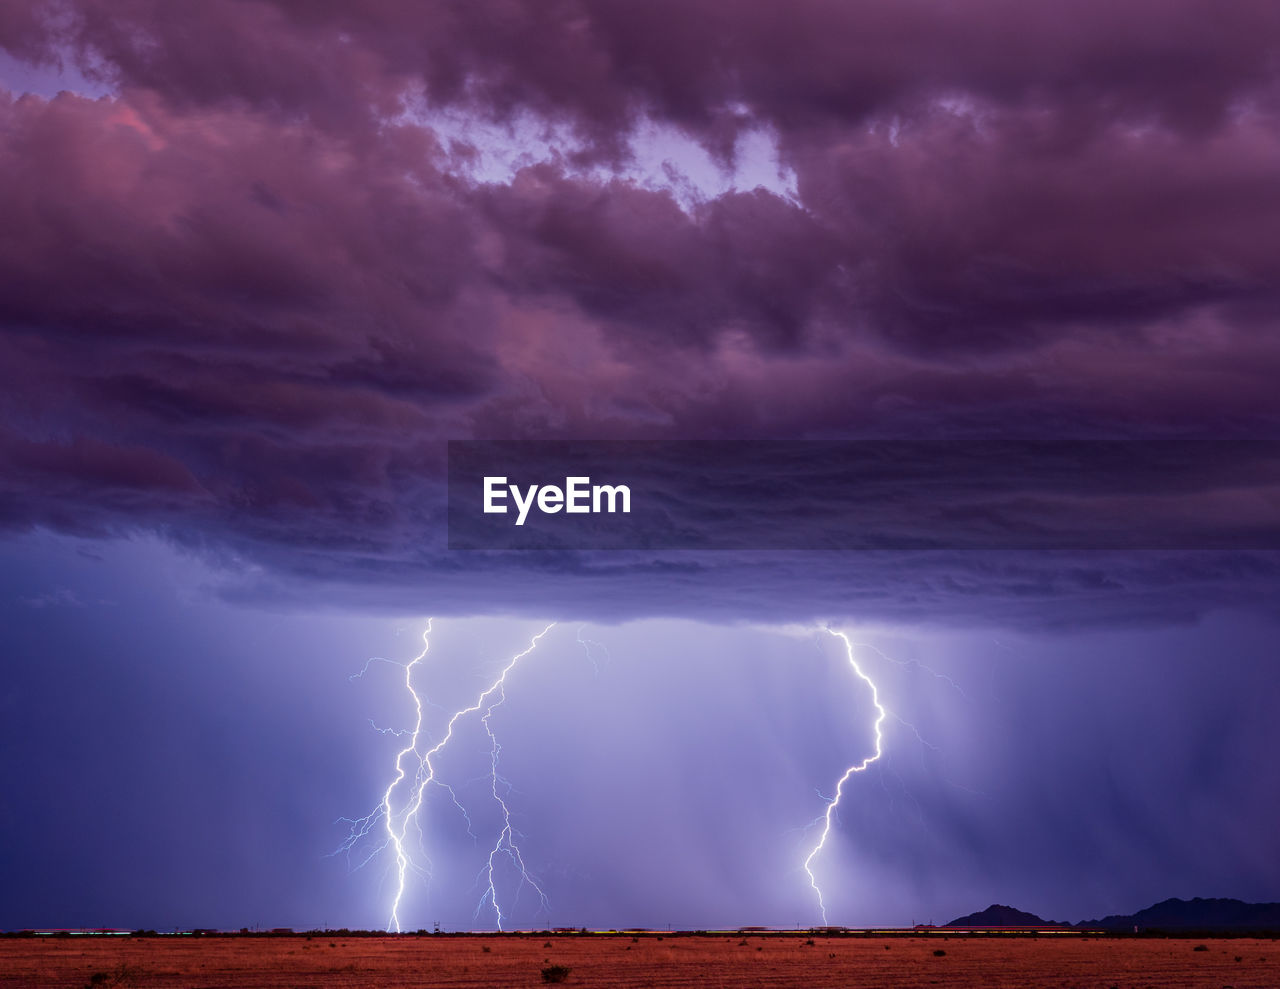 Multiple lightning strikes from a monsoon thunderstorm near phoenix, arizona